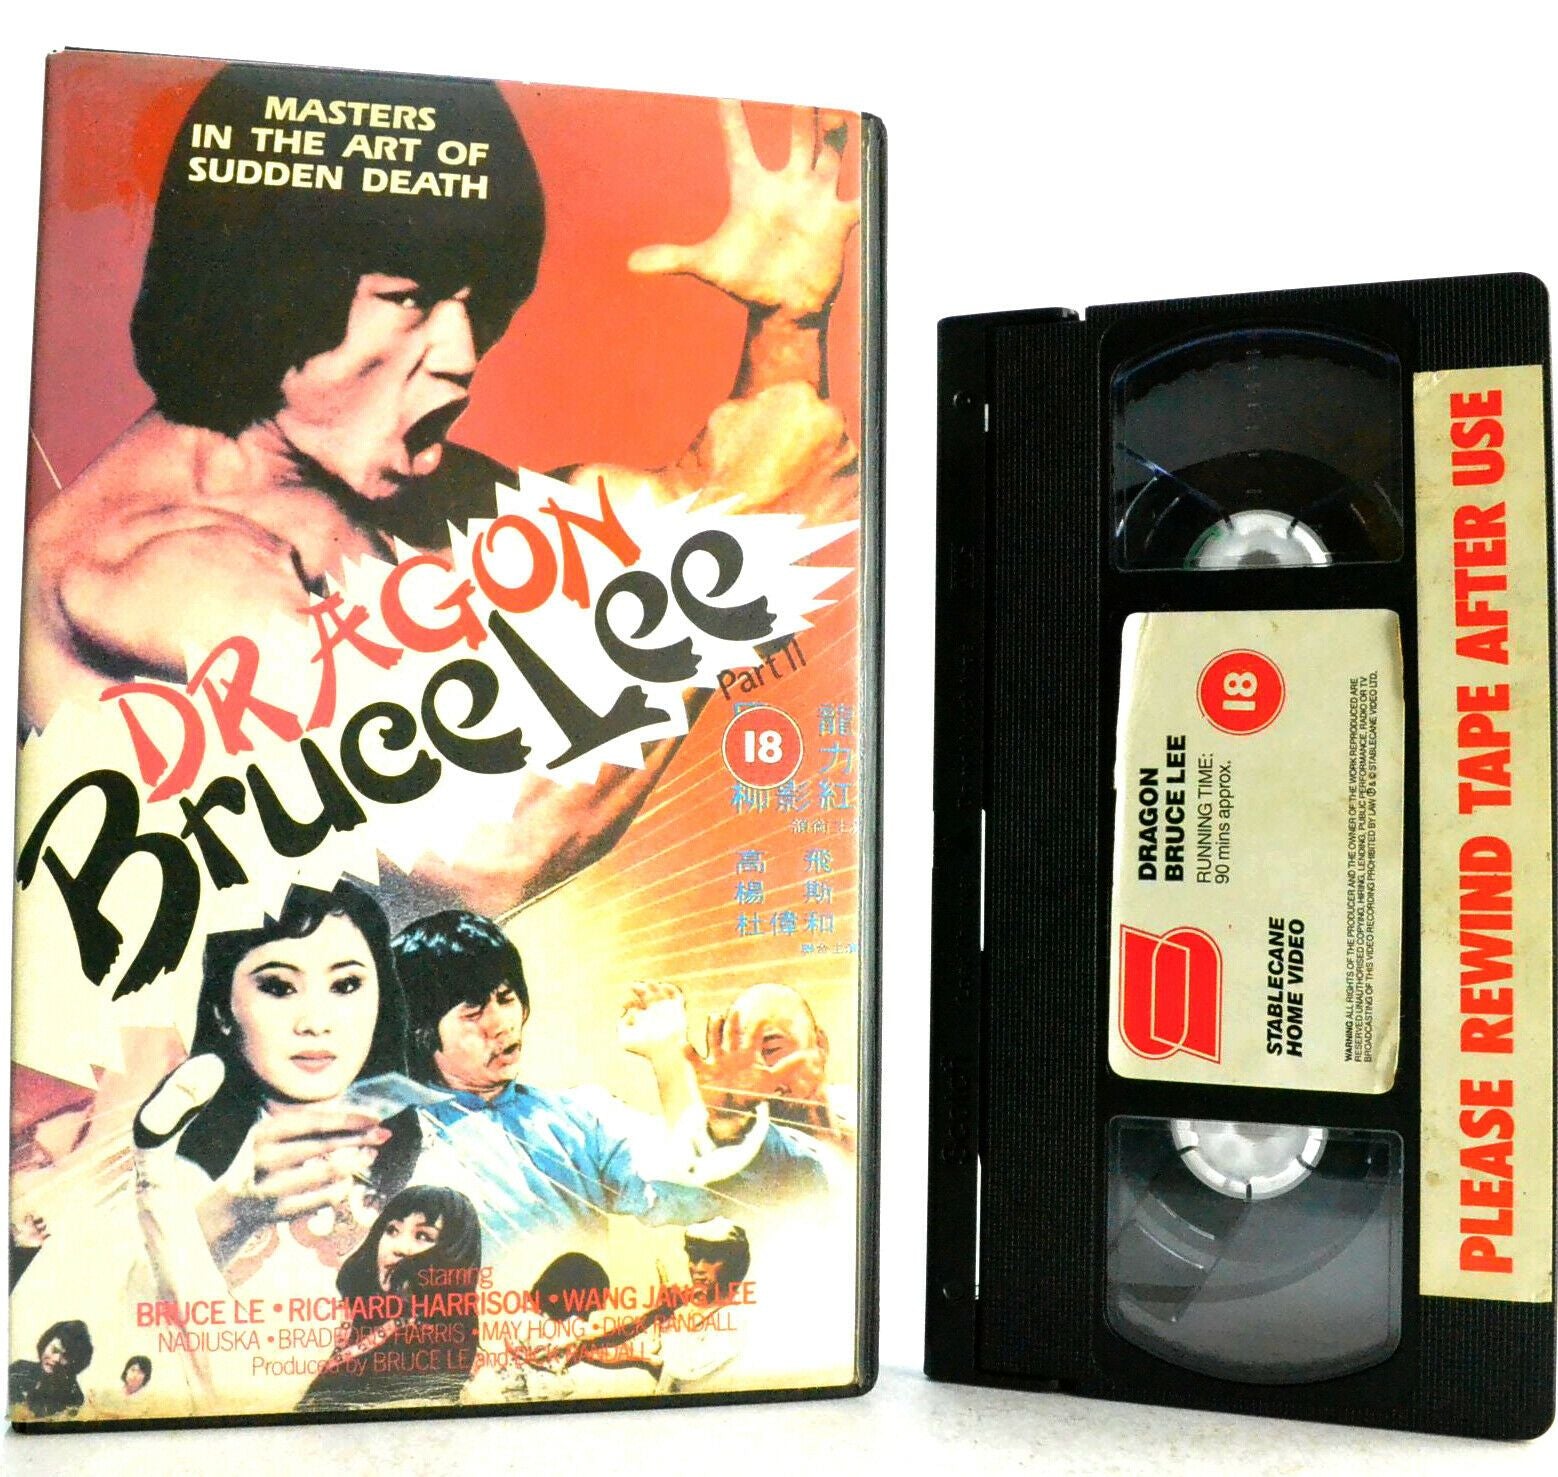 Dragon Bruce Lee - Part 2 - Big Boss 2 - Bruceploitation - Kungfu - Pre Cert VHS-